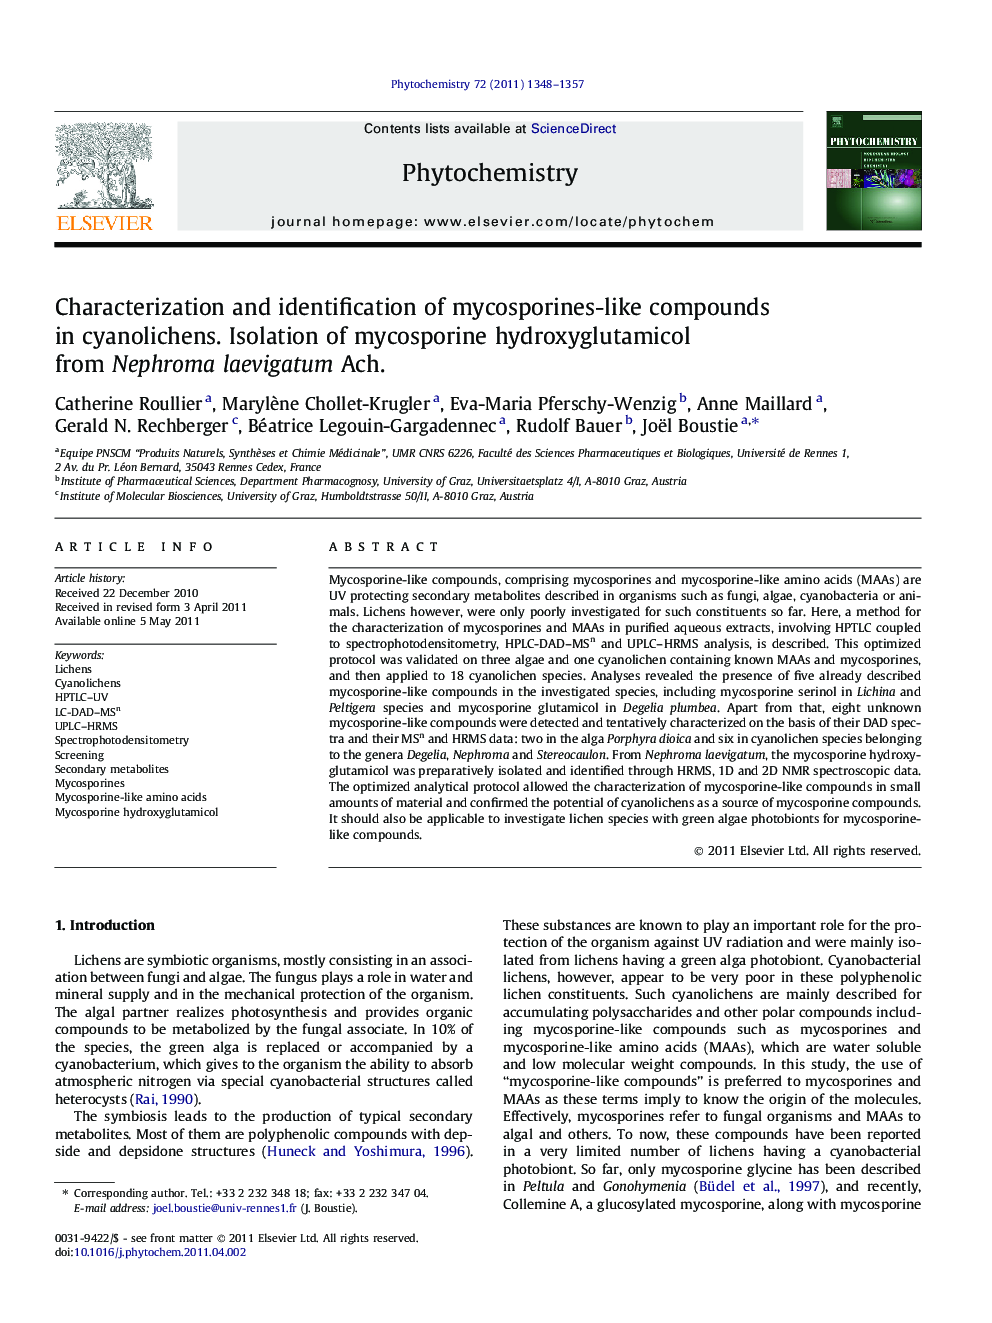 Characterization and identification of mycosporines-like compounds in cyanolichens. Isolation of mycosporine hydroxyglutamicol from Nephroma laevigatum Ach.